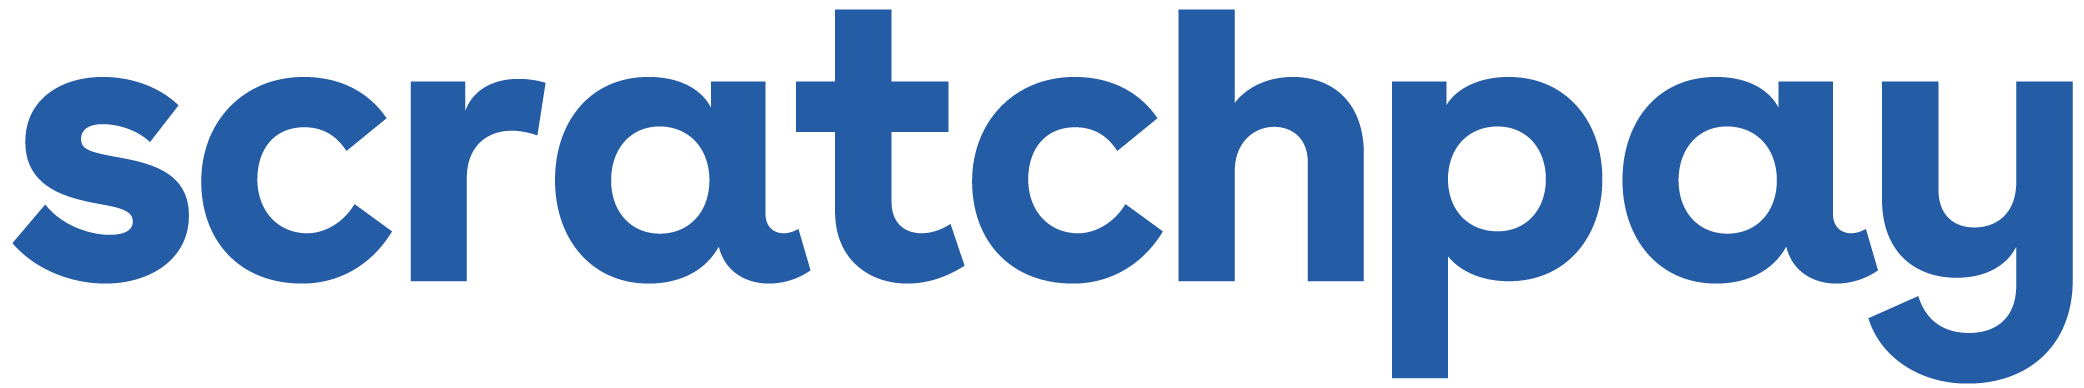 Scratchpay_Logo_Wordmark_Small_Blue.webp